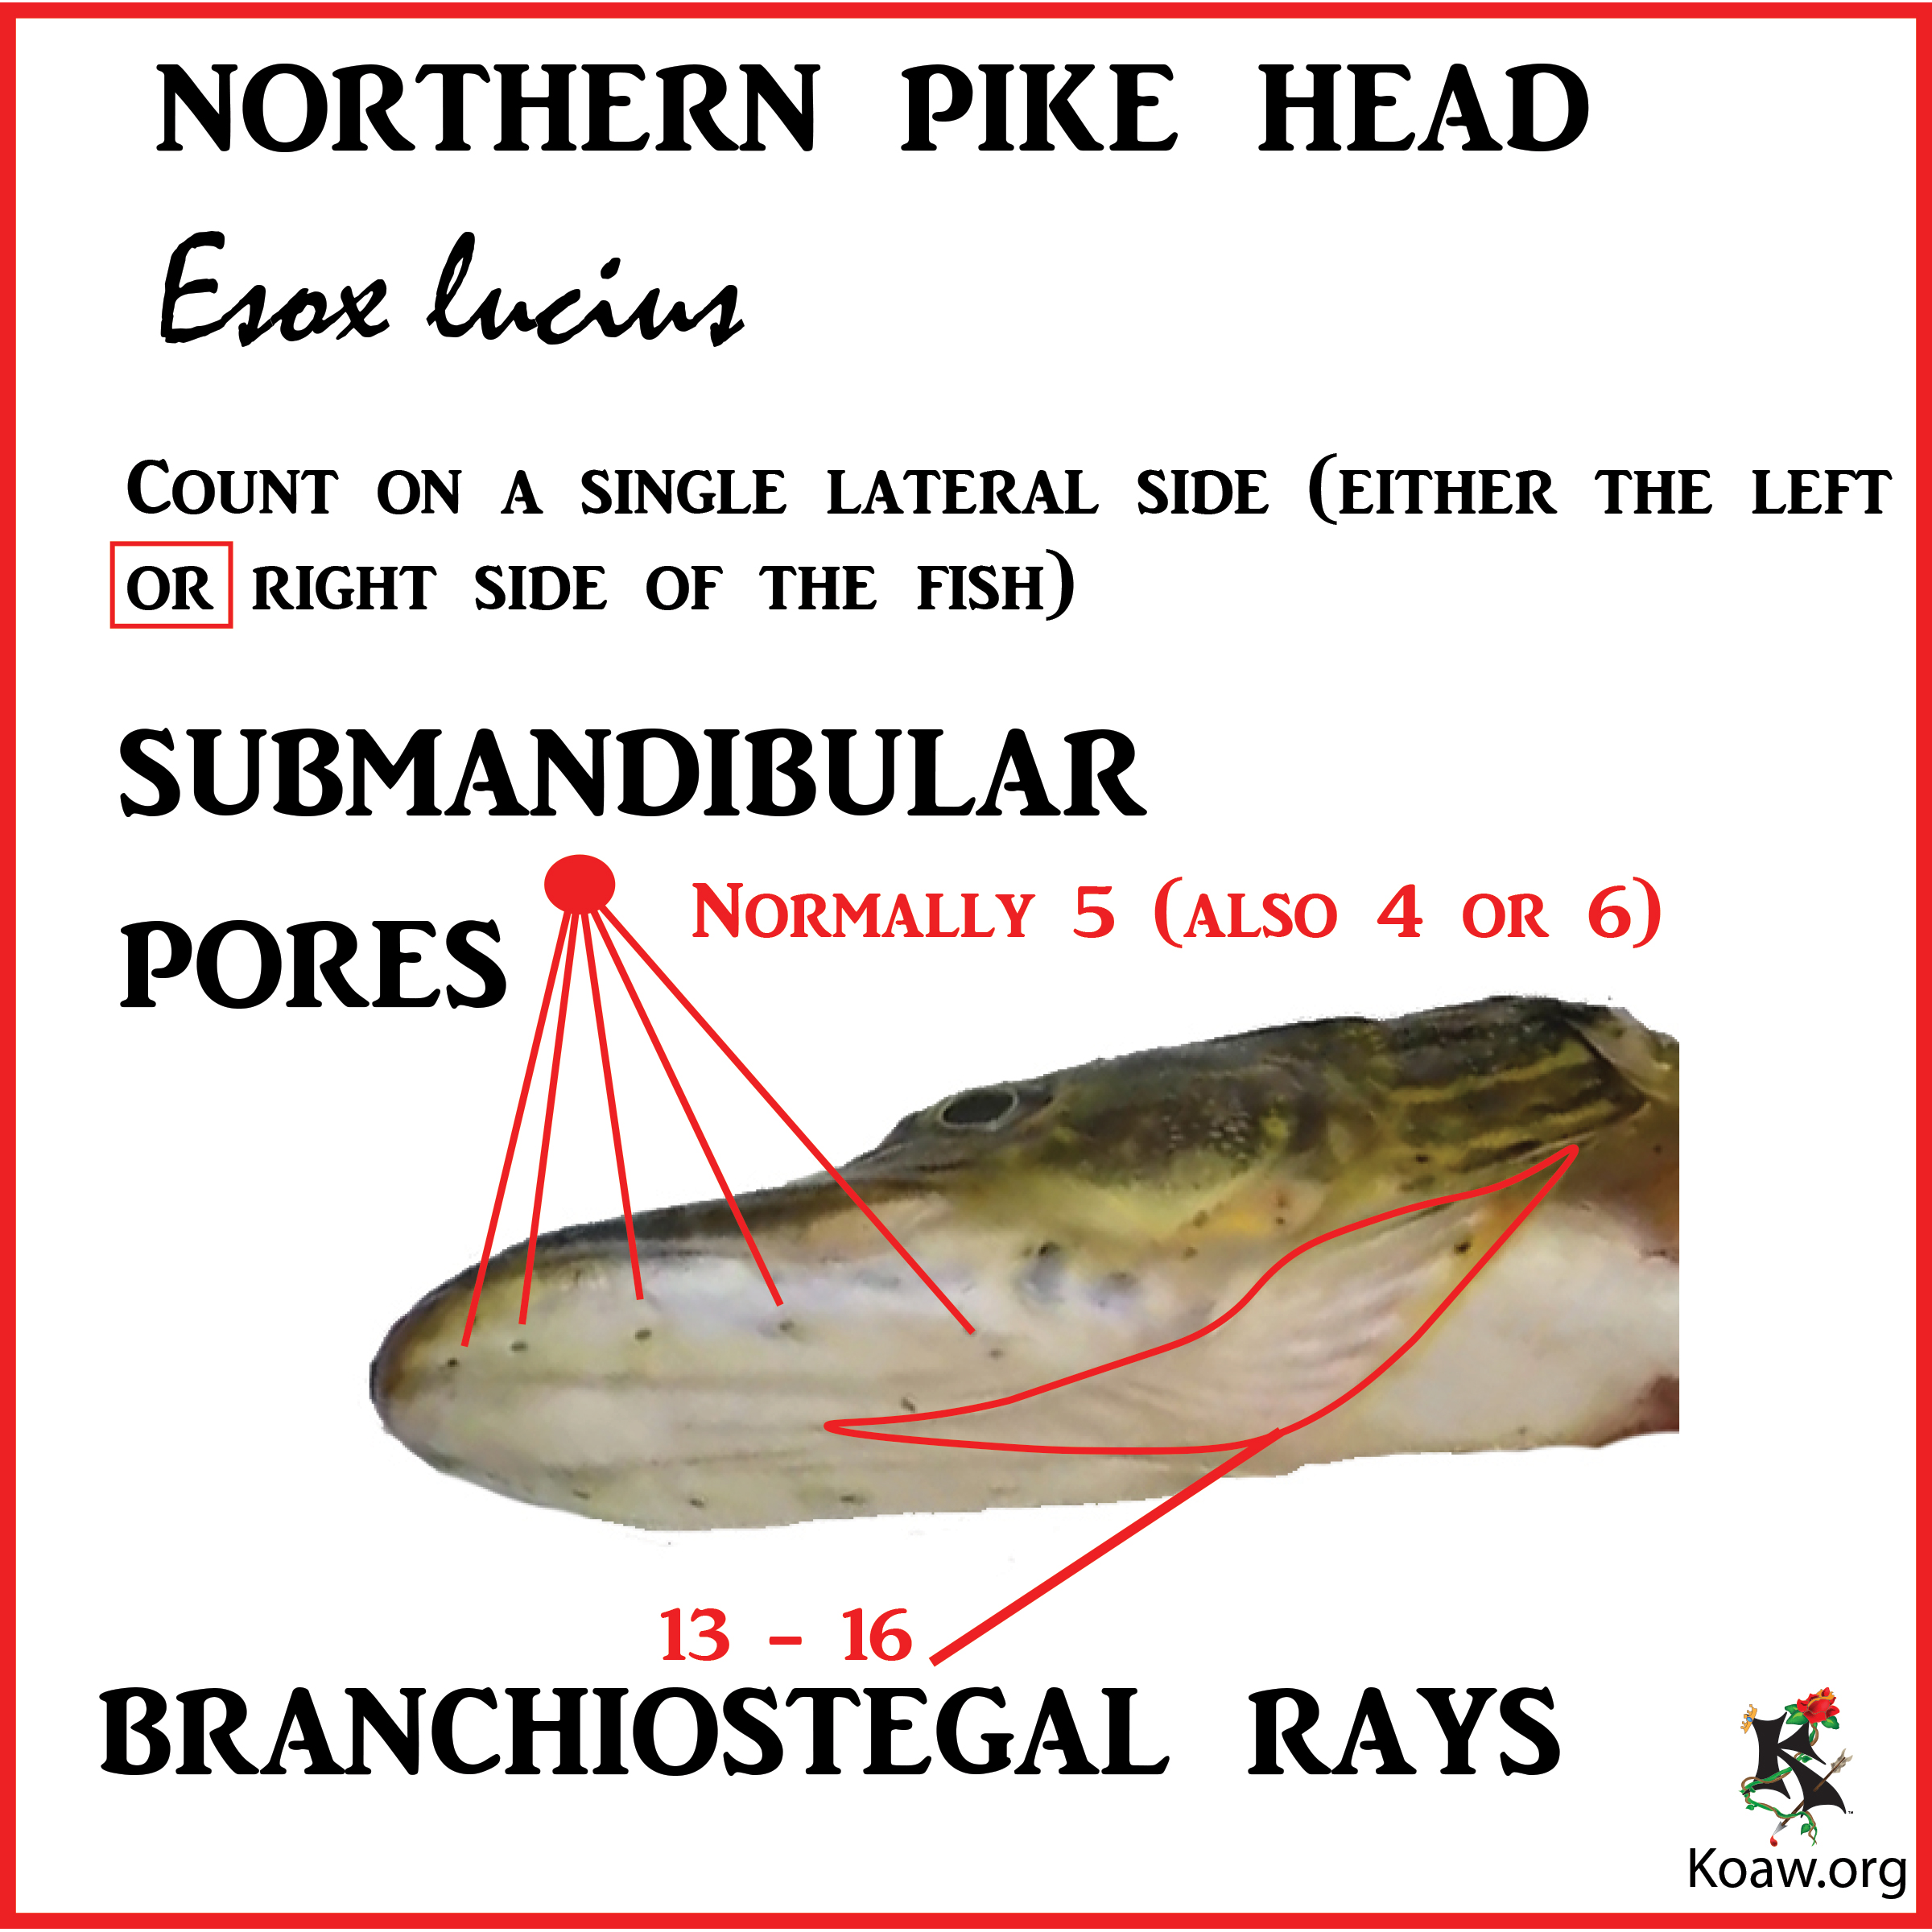 Submandibular Pores & Branchiostegal Rays N. Pike - Illustration by Koaw